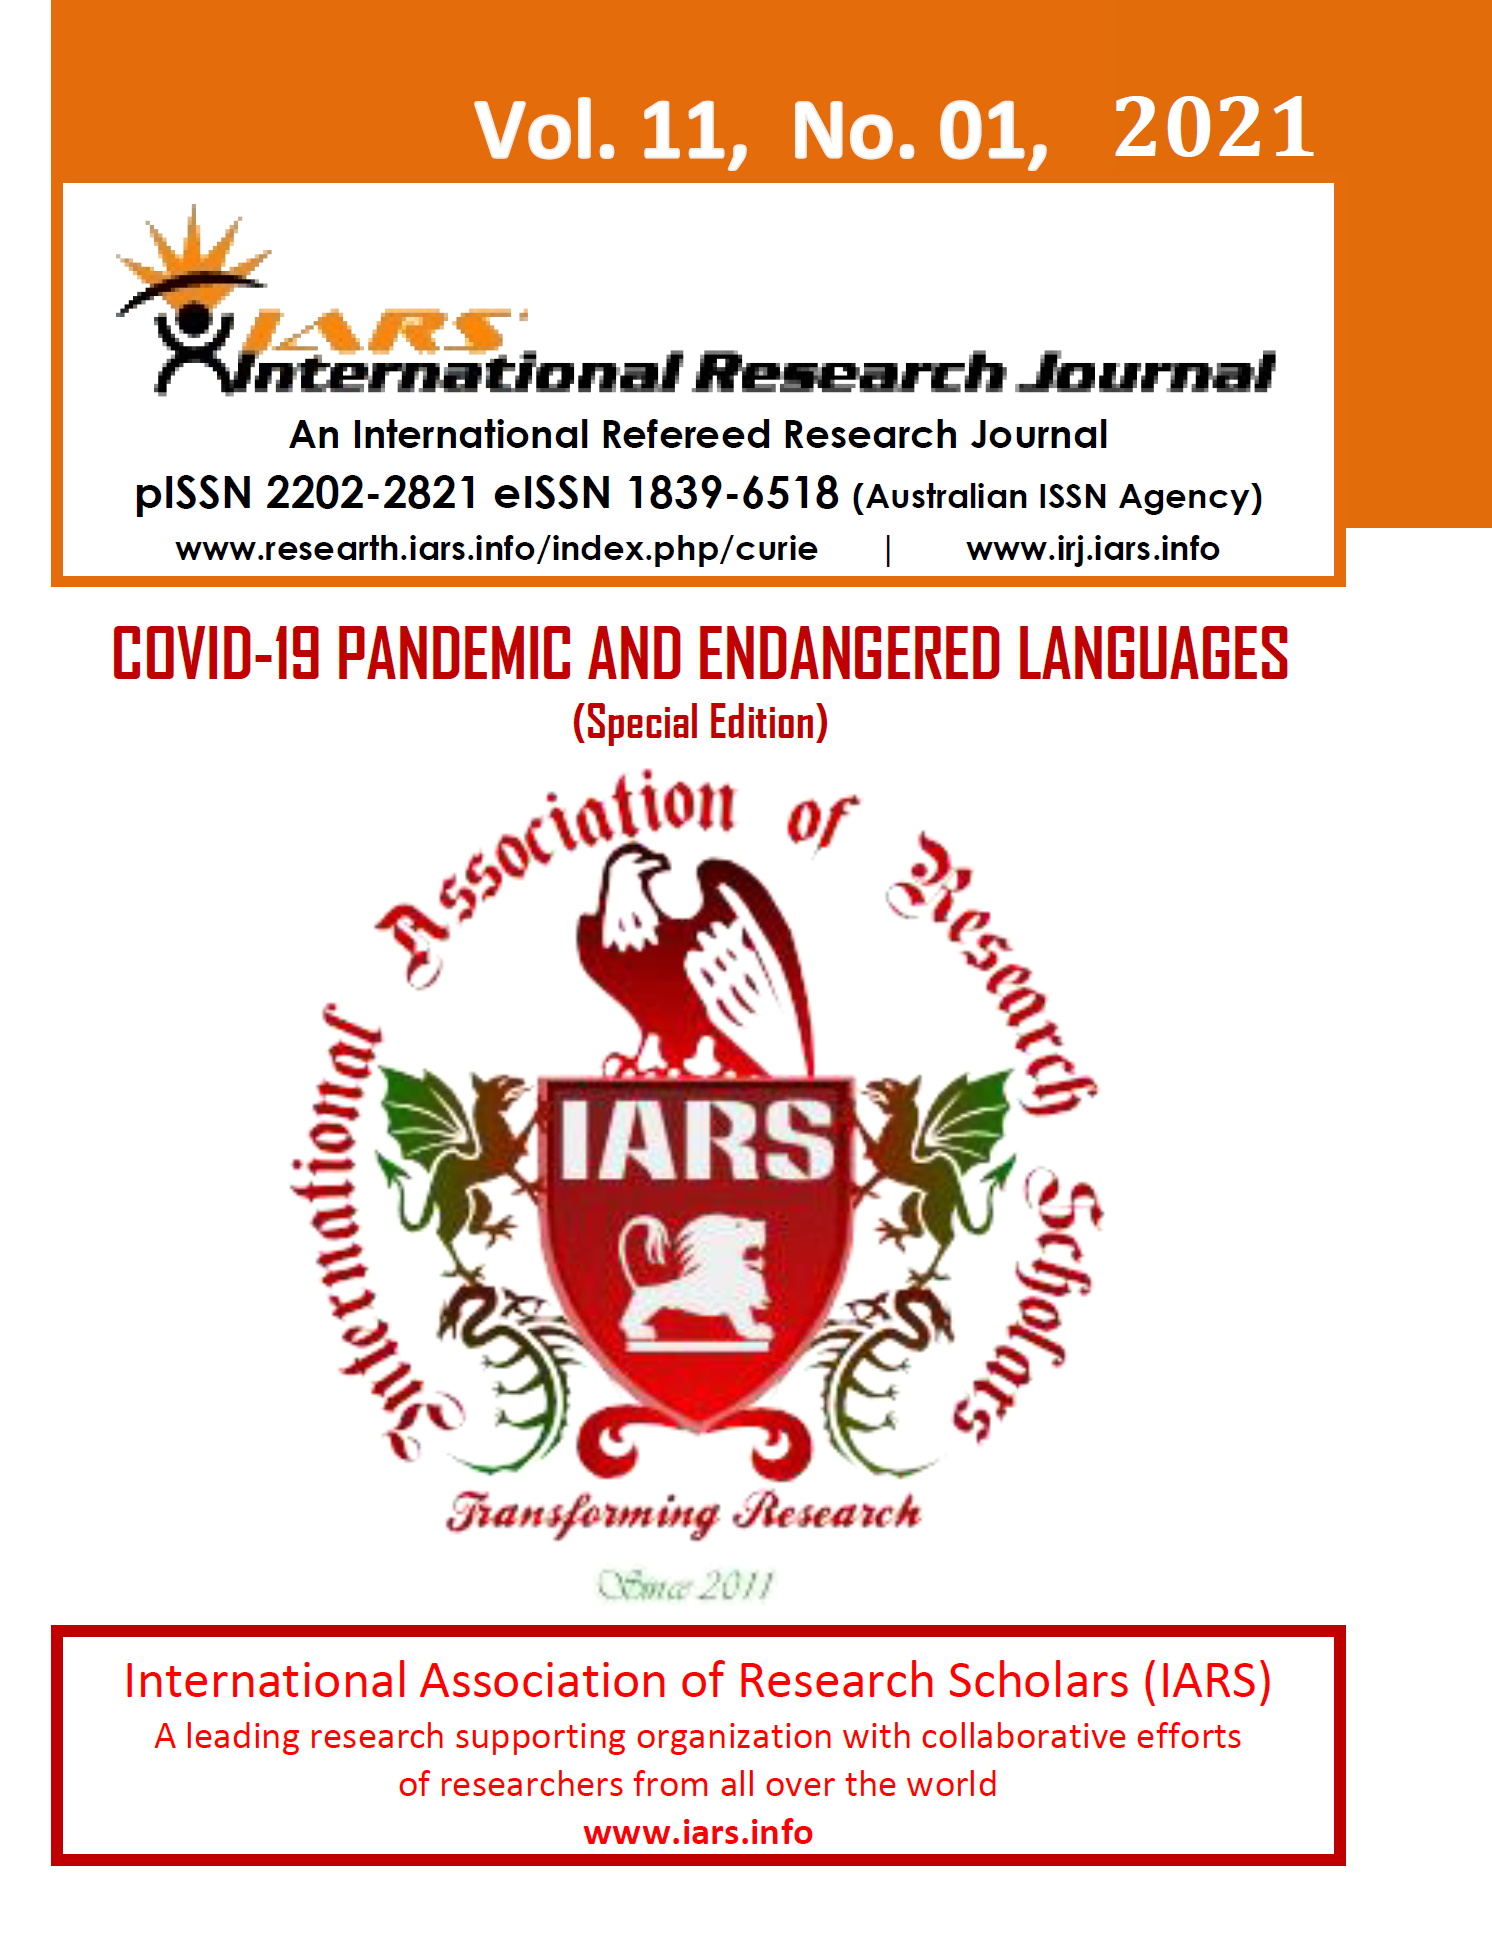 					View Vol. 11 No. 1 (2021): IARS' International Research Journal
				